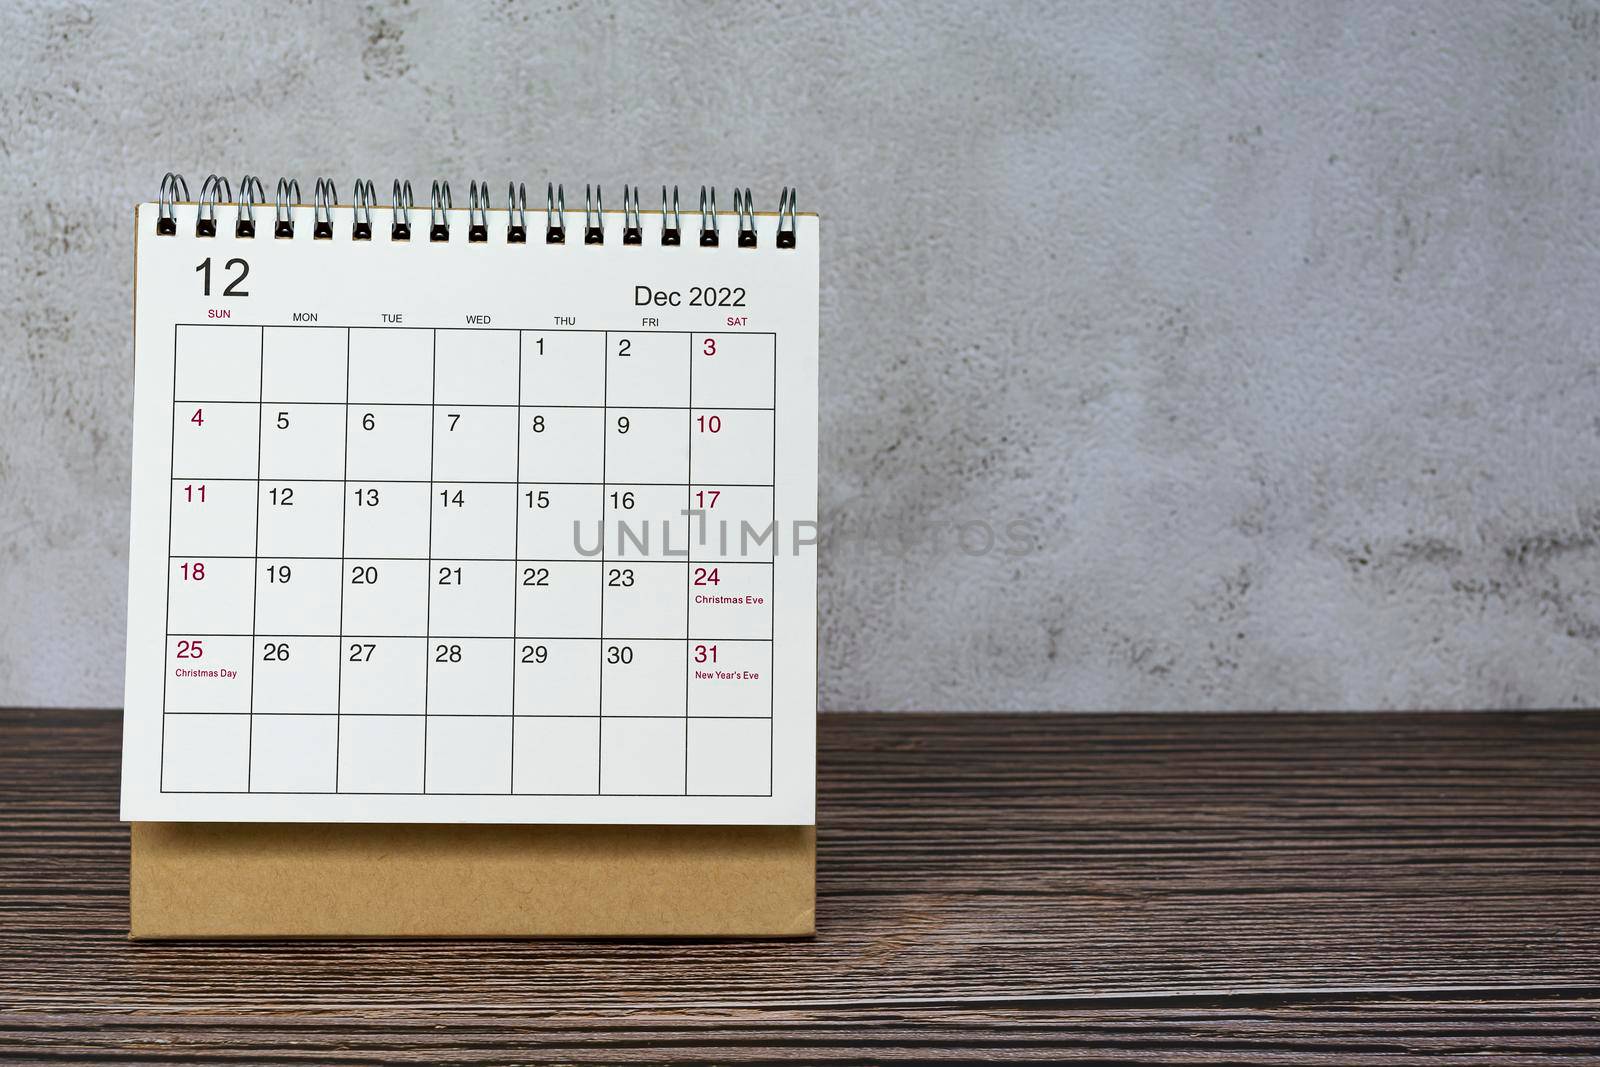 December 2022 white calendar on wooden desk. Celebration date and copy space.